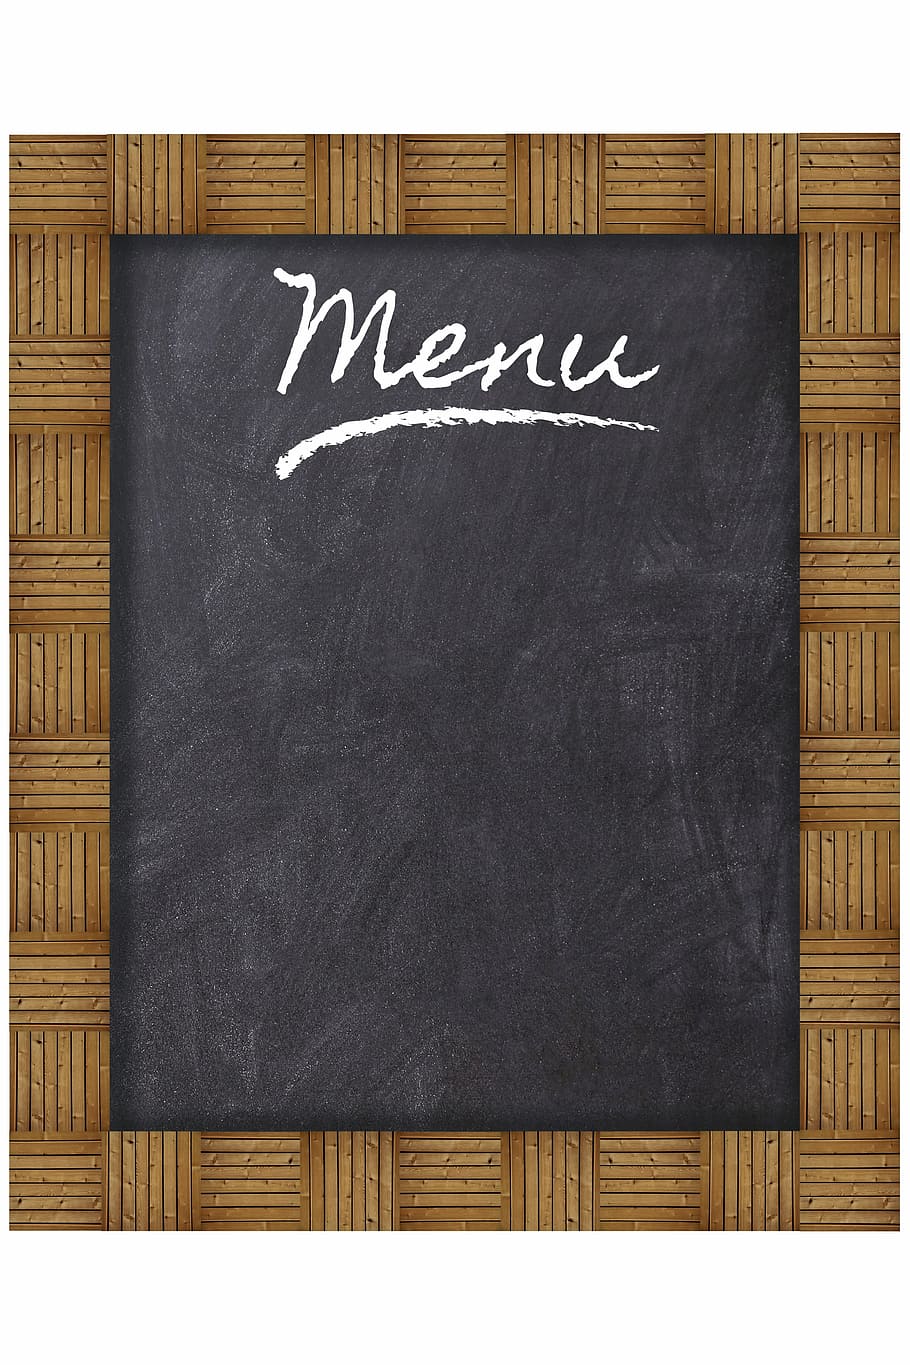 black menu book, Frame, Wood, Board, Menu, Restaurant, eat, slate, blackboard, education